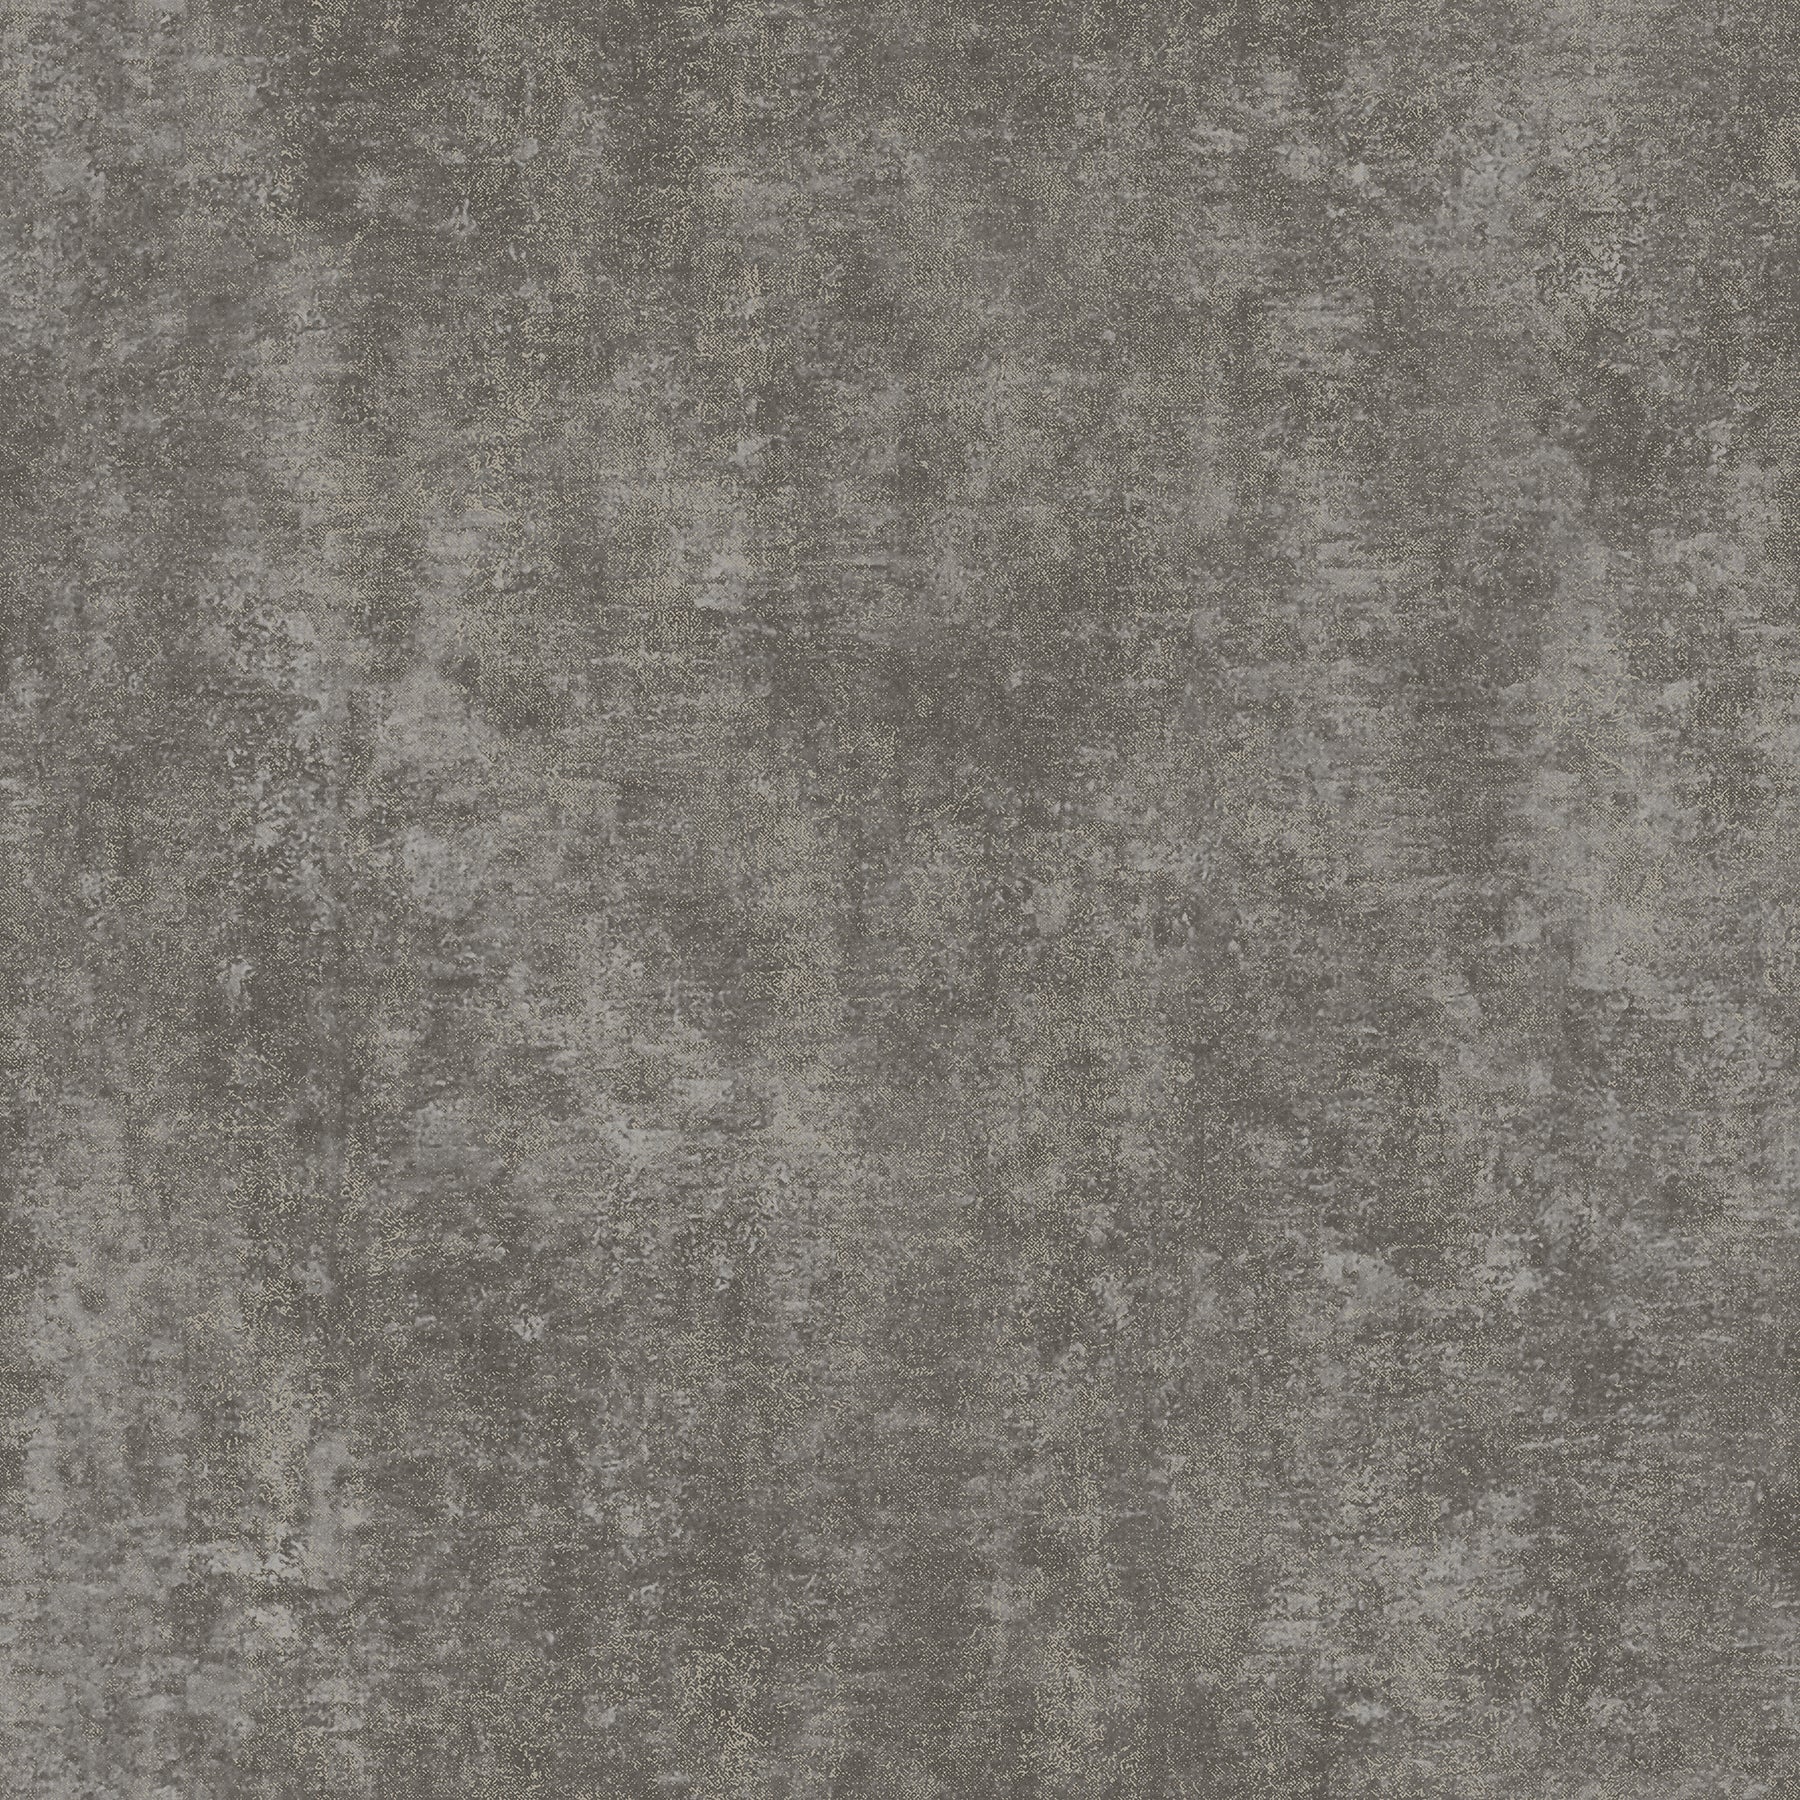 Order 2959-SDM5004 Textural Essentials Keagan Slate Distressed Texture Slate Brewster Wallpaper